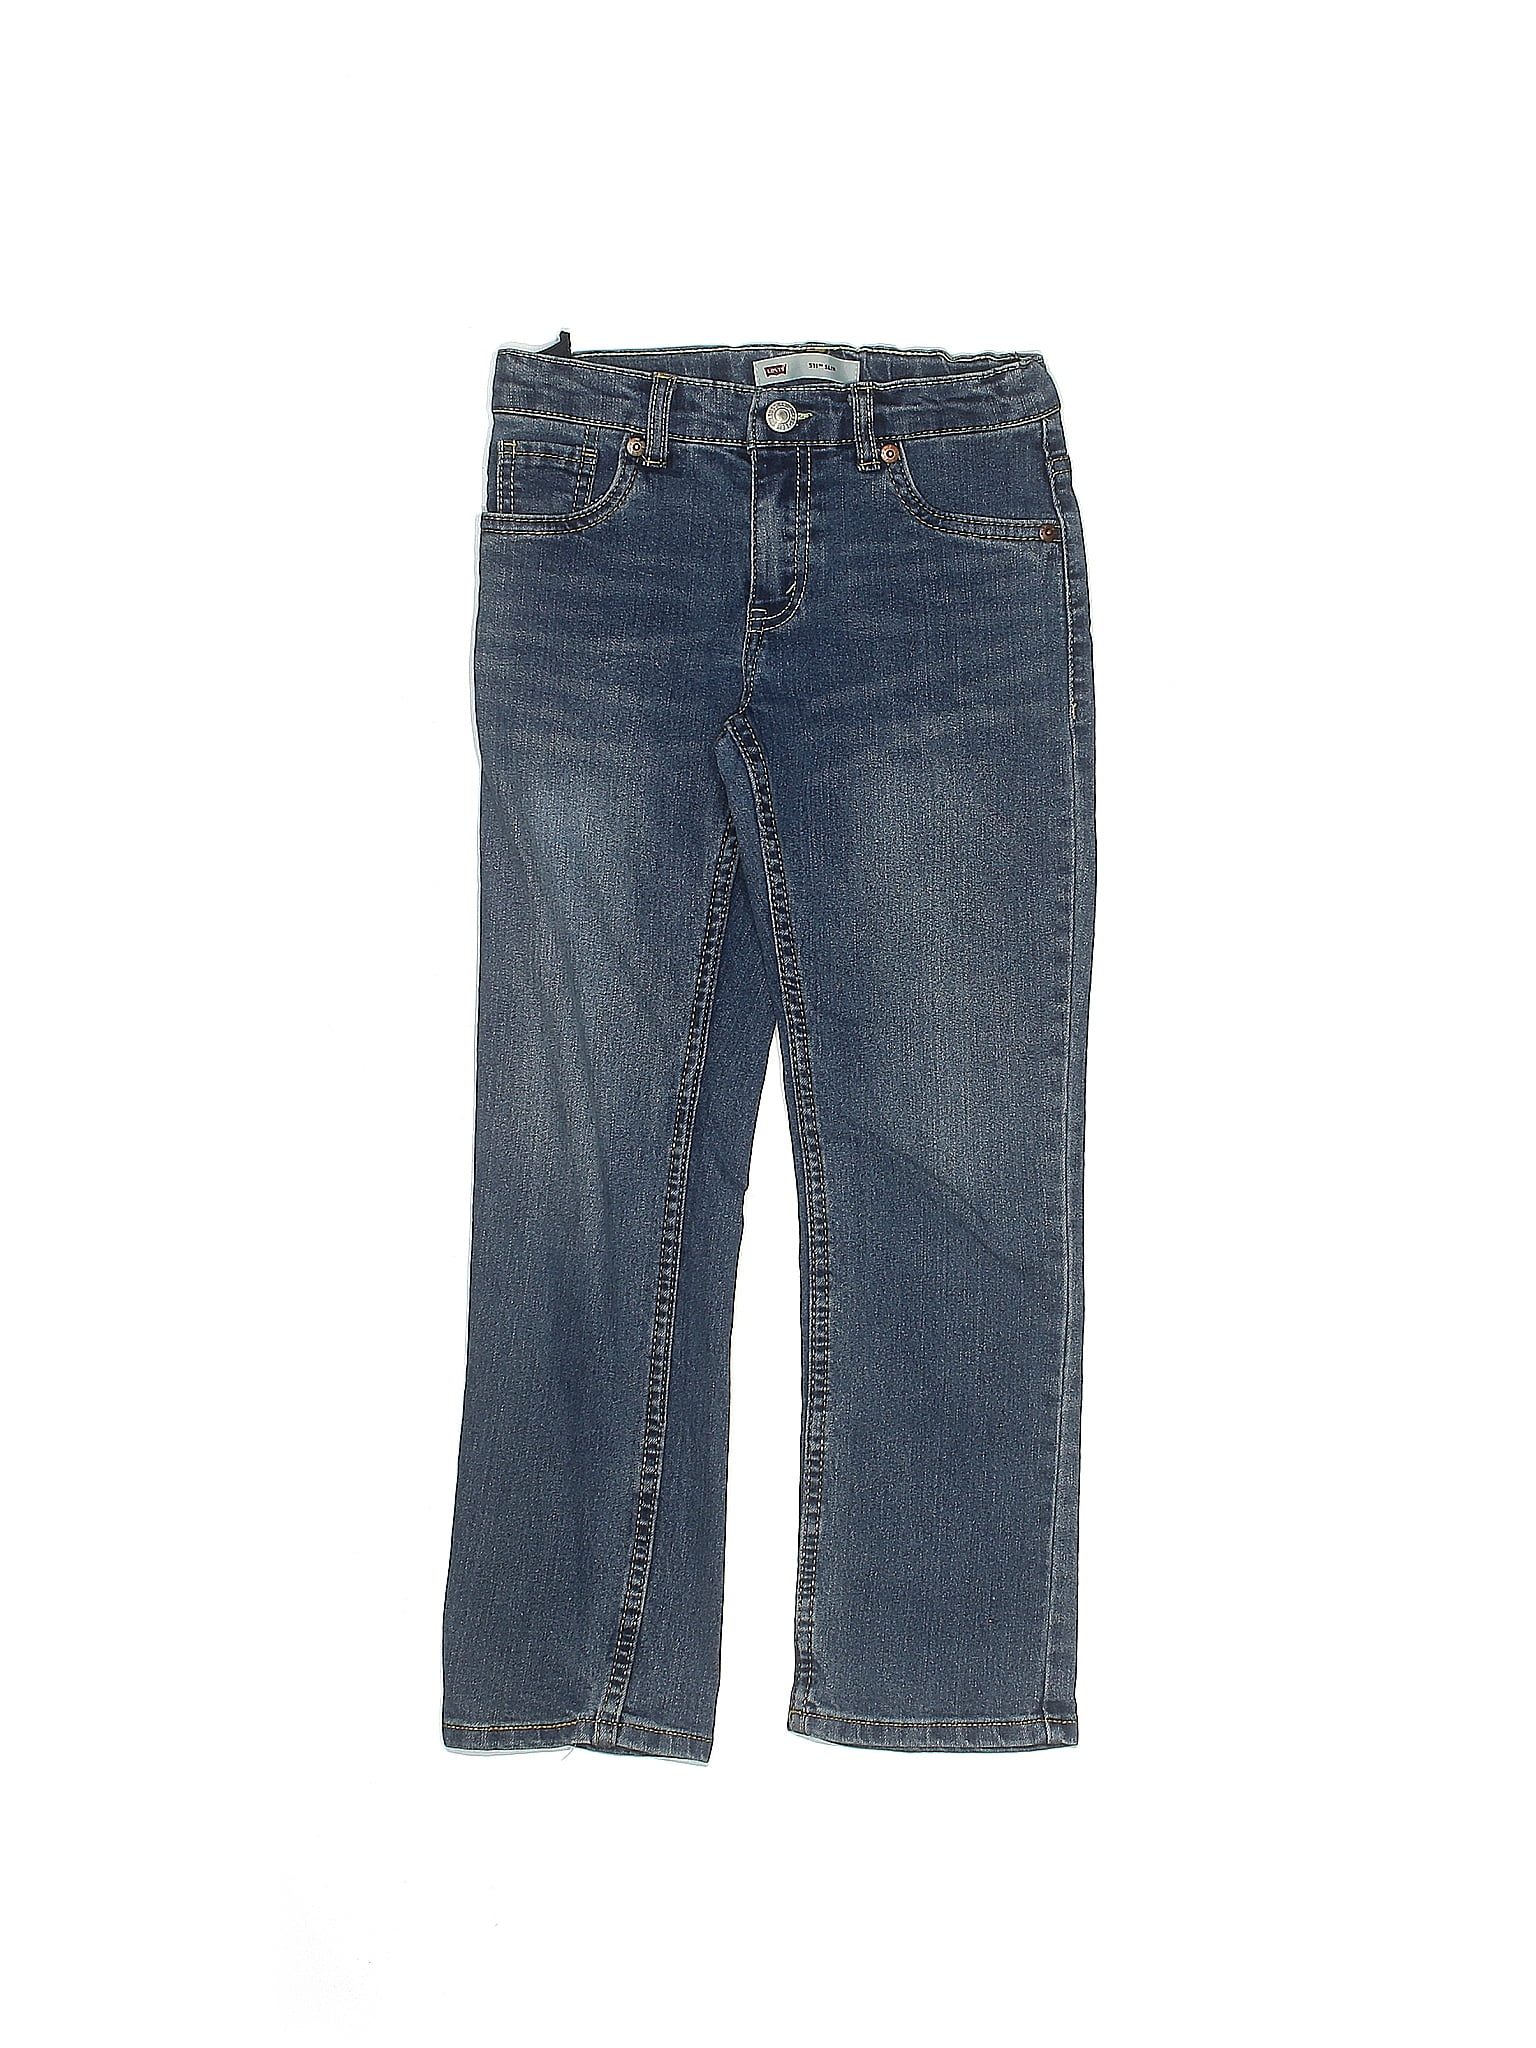 C9 By Champion Blue Active Pants Size XL - 45% off